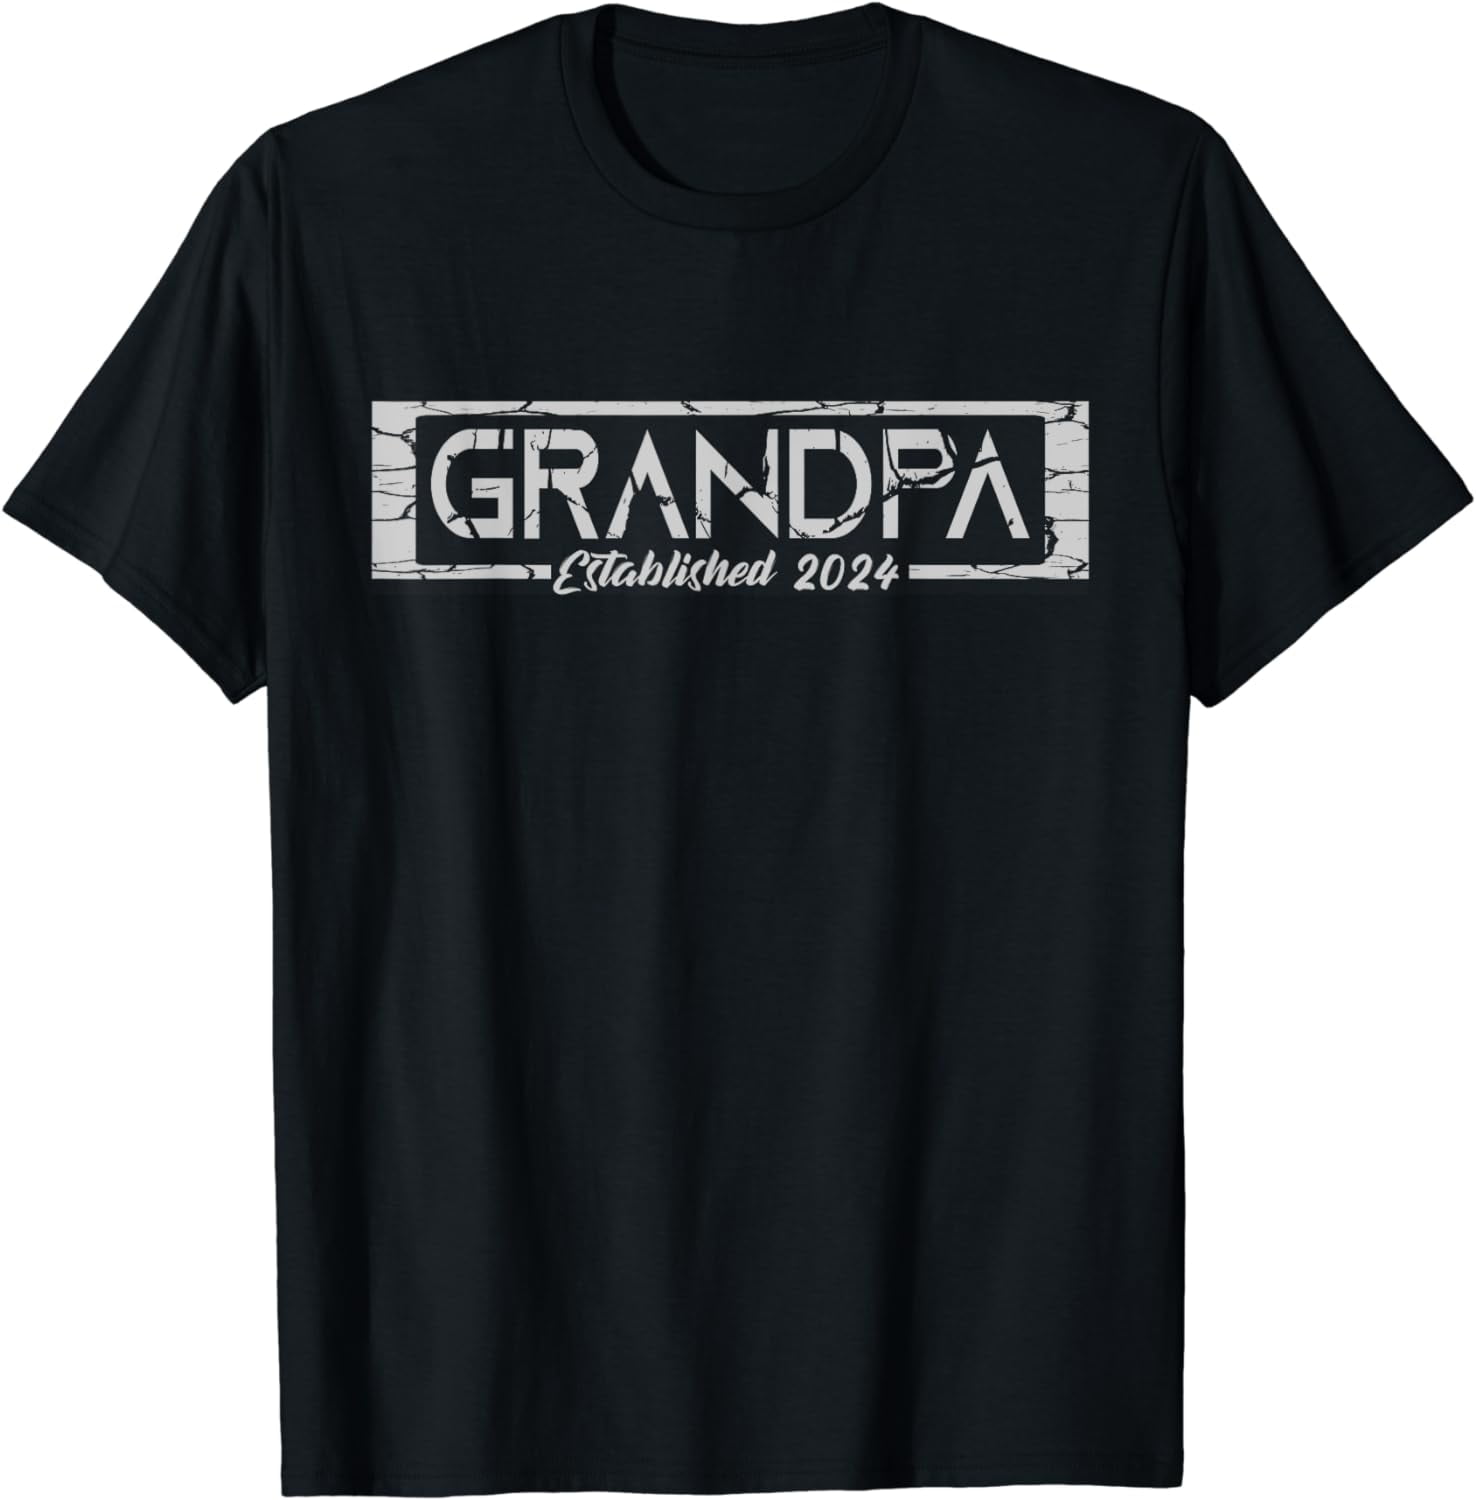 New Grandfather 2024, New Grandpa, Grandpa Established 2024 T-Shirt ...